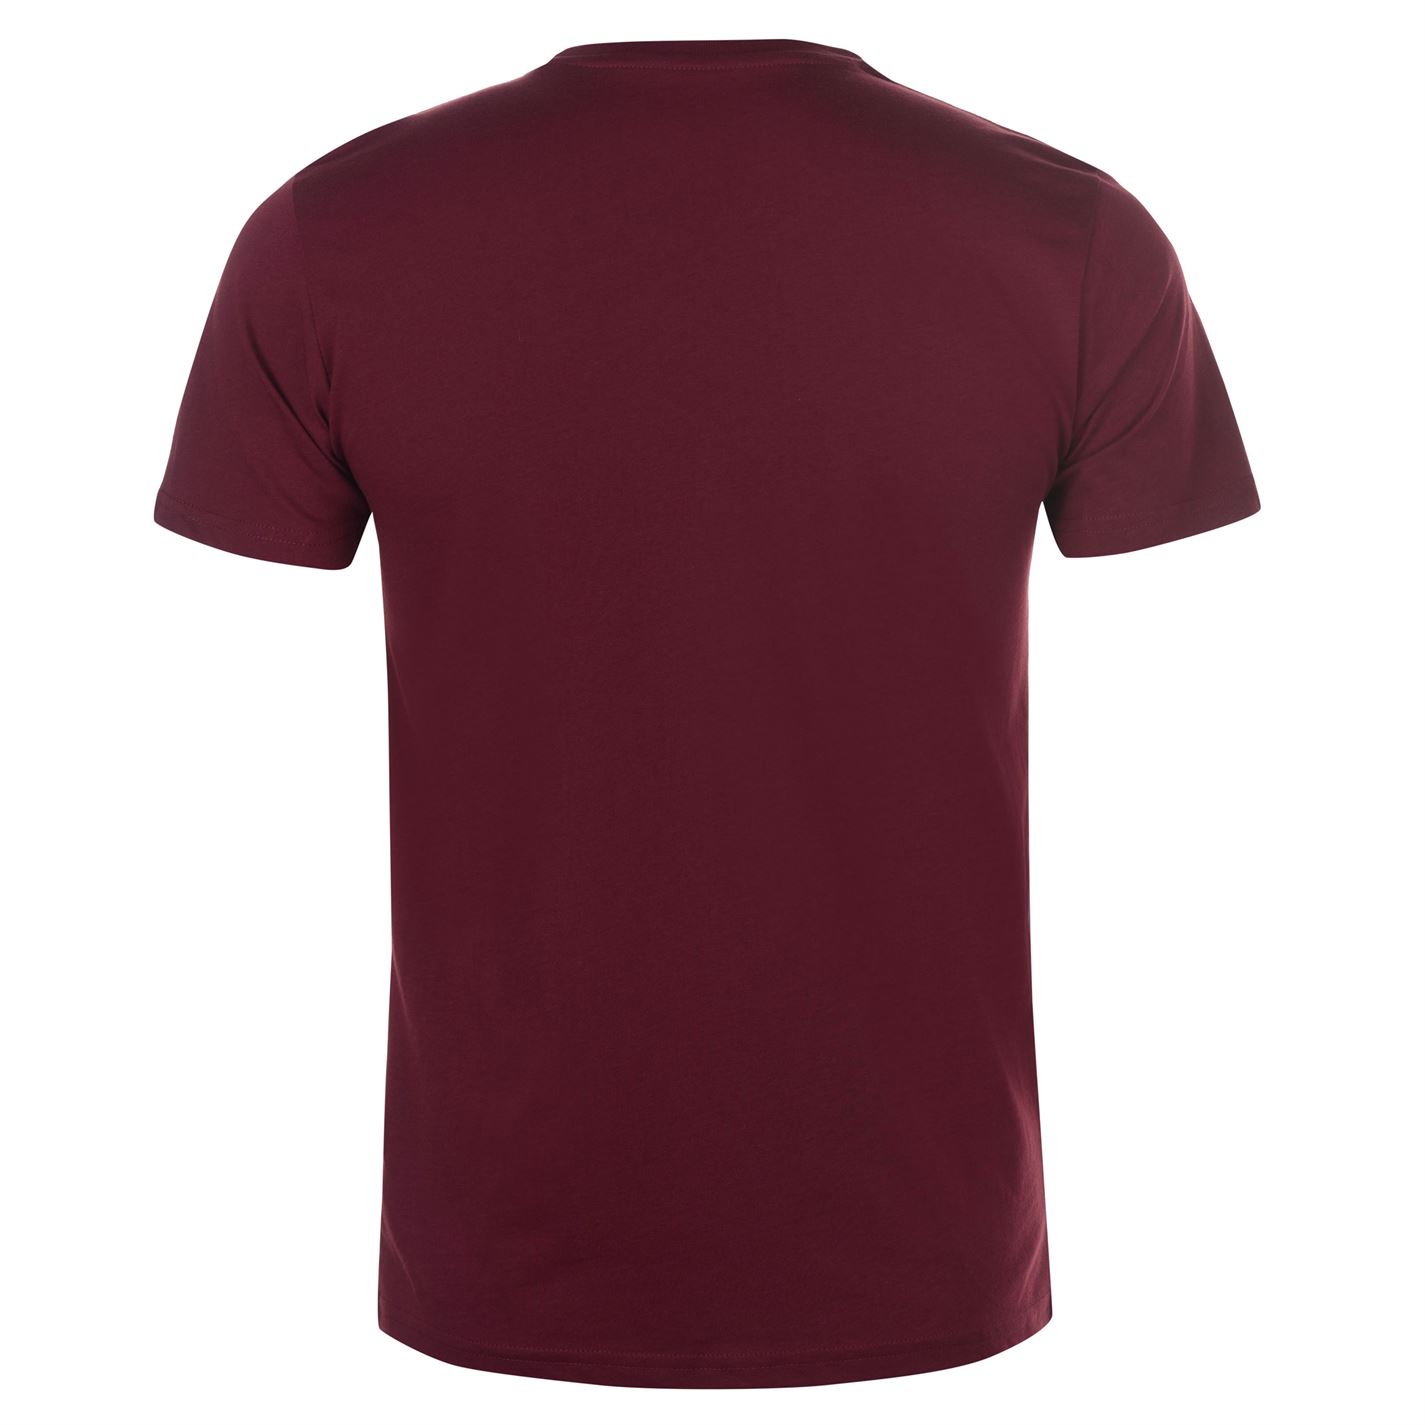 Mens Alpha Industries Basic Tee Crew Neck Shirt Short Sleeve New | eBay